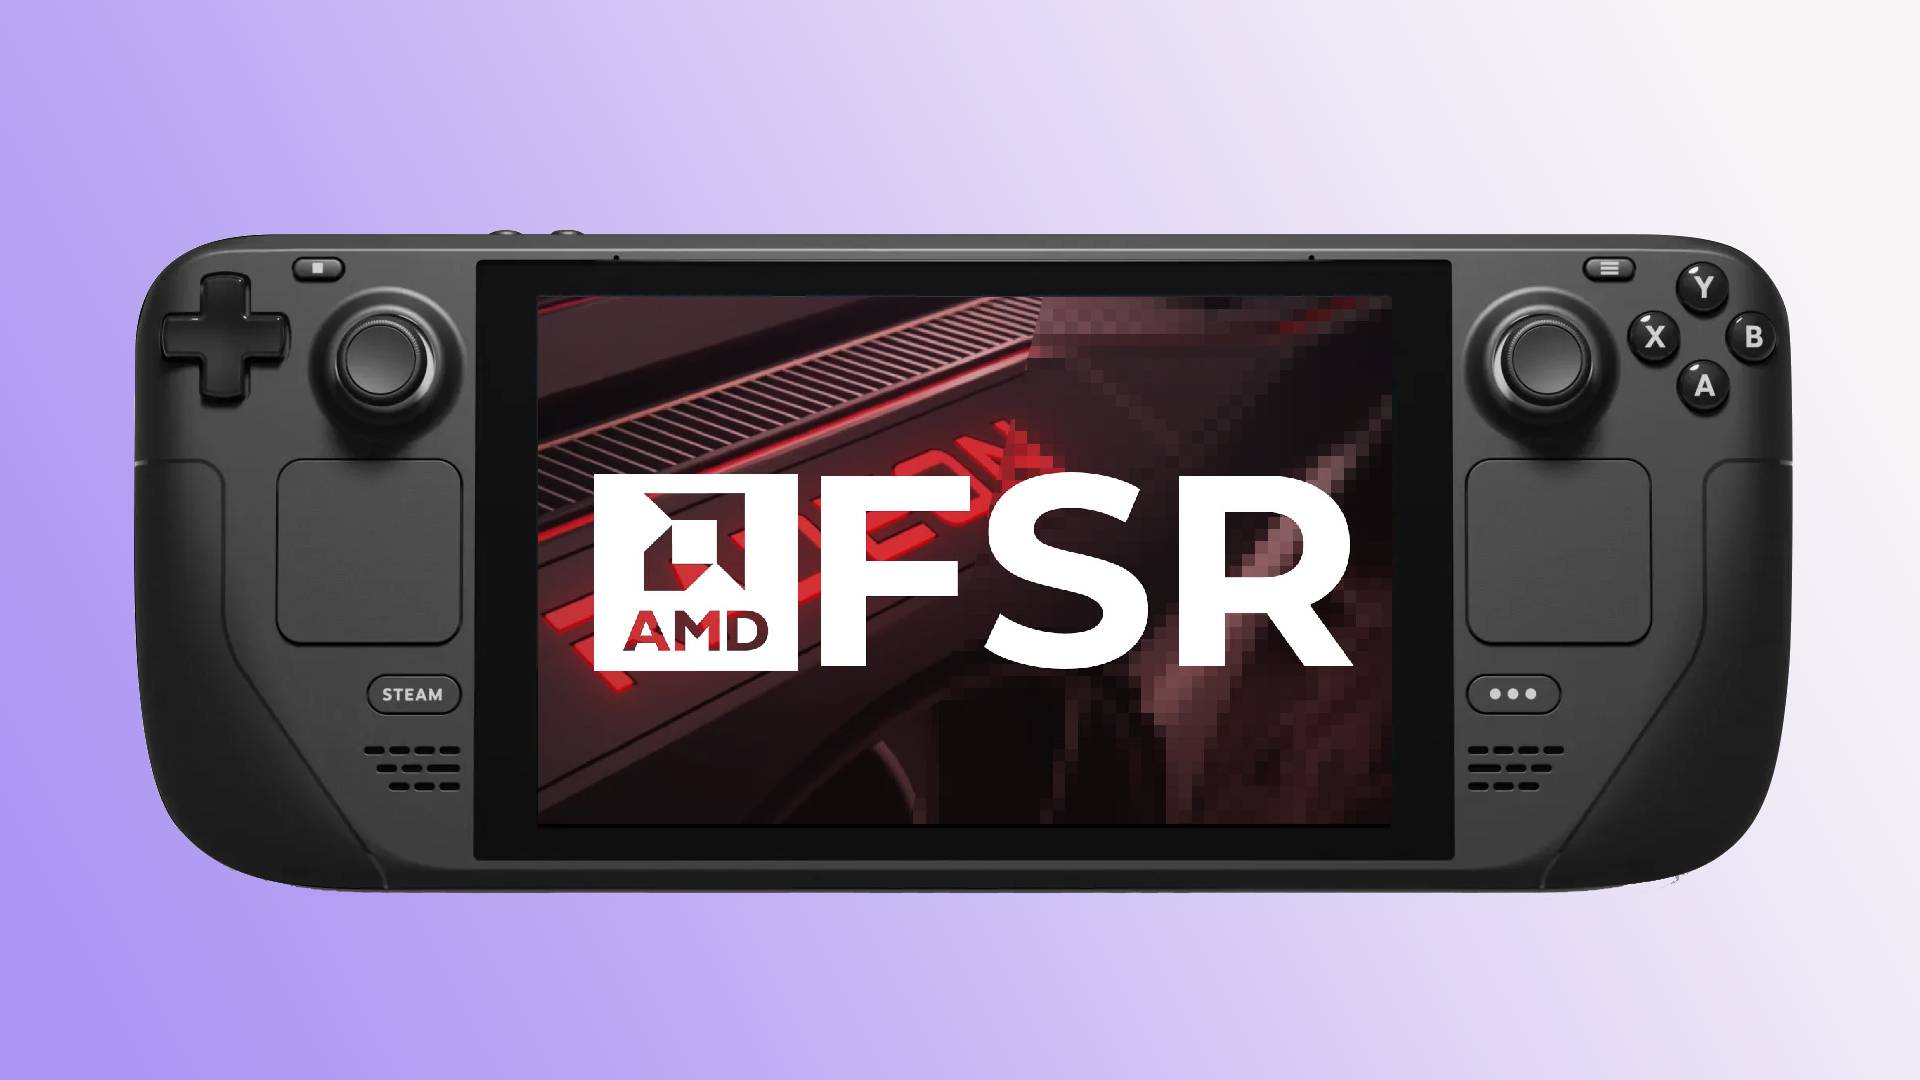 All Steam Deck games will support AMD FSR upscaling